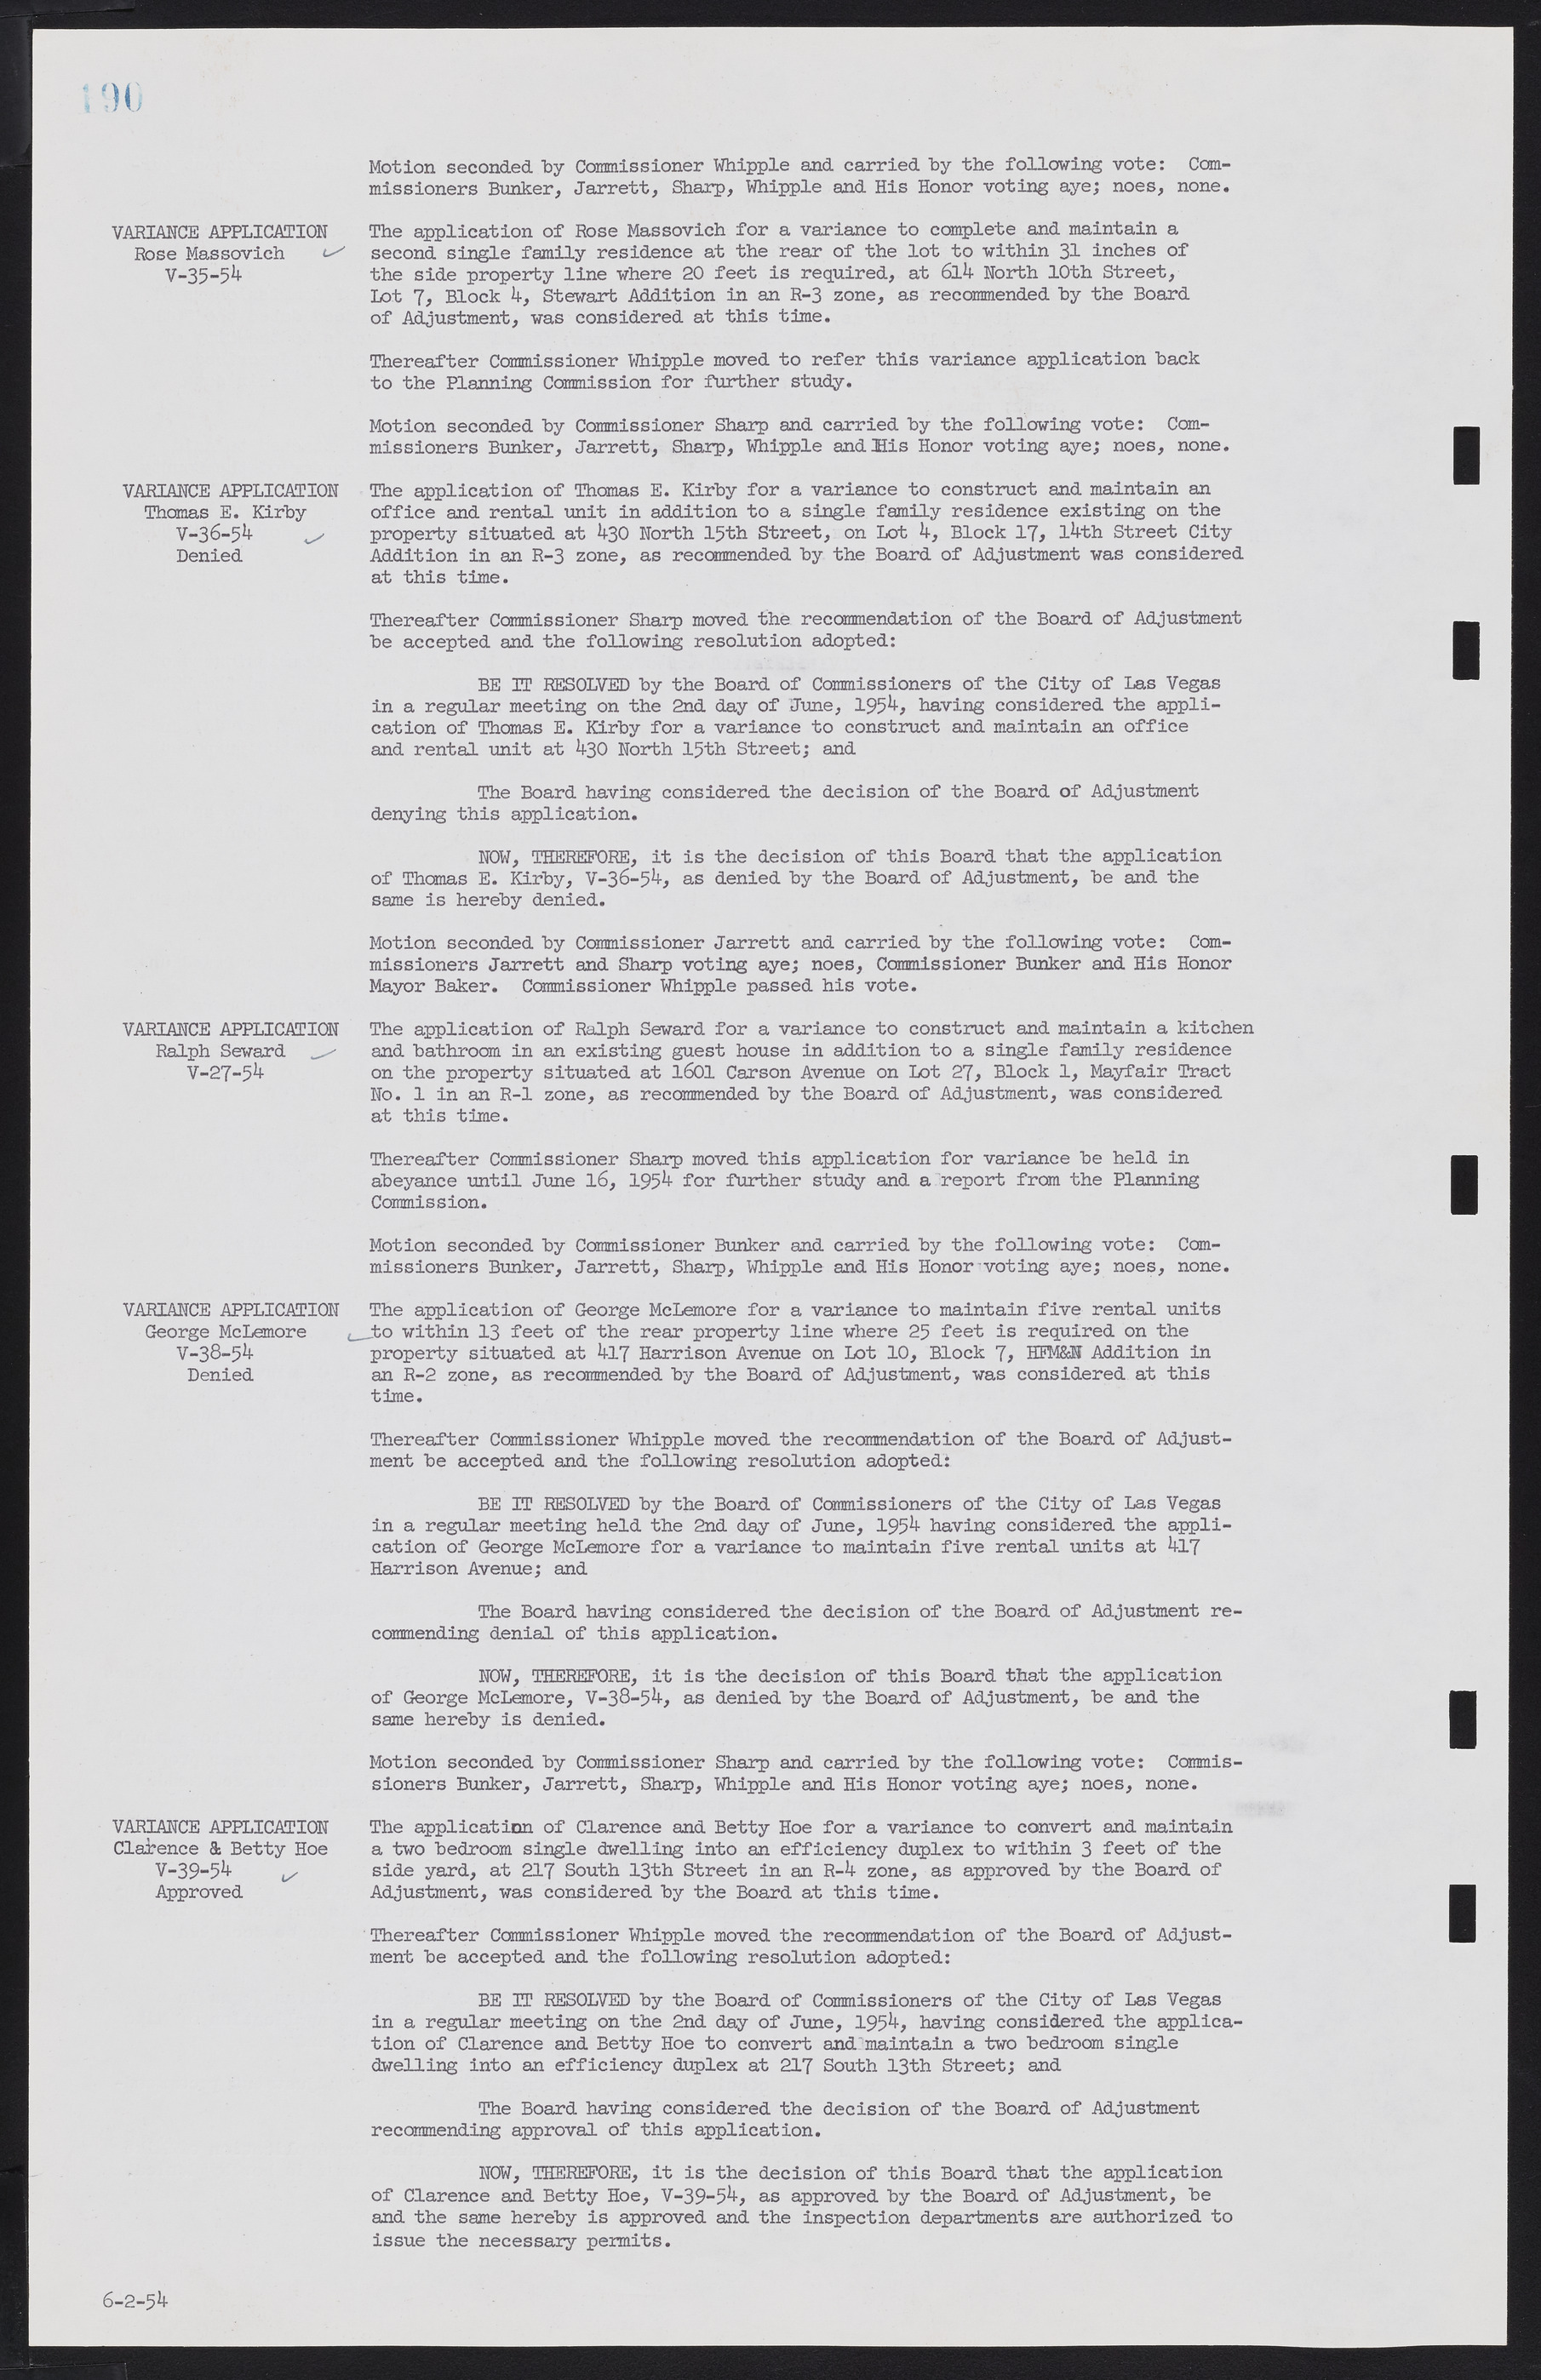 Las Vegas City Commission Minutes, February 17, 1954 to September 21, 1955, lvc000009-196